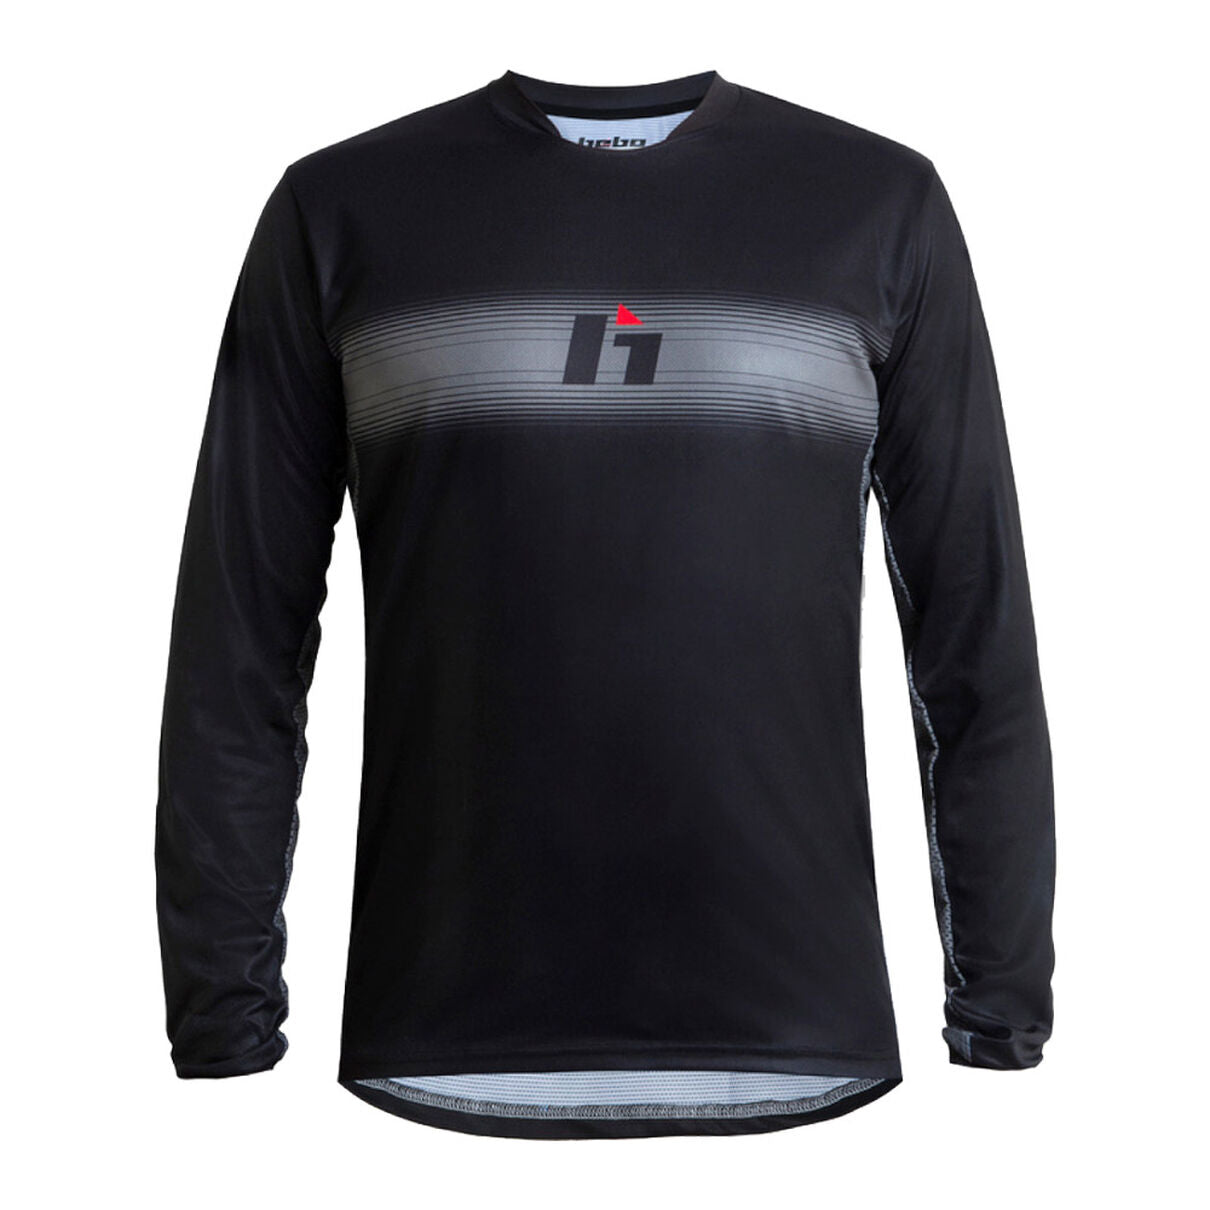 Hebo Trials Shirt Tech Black